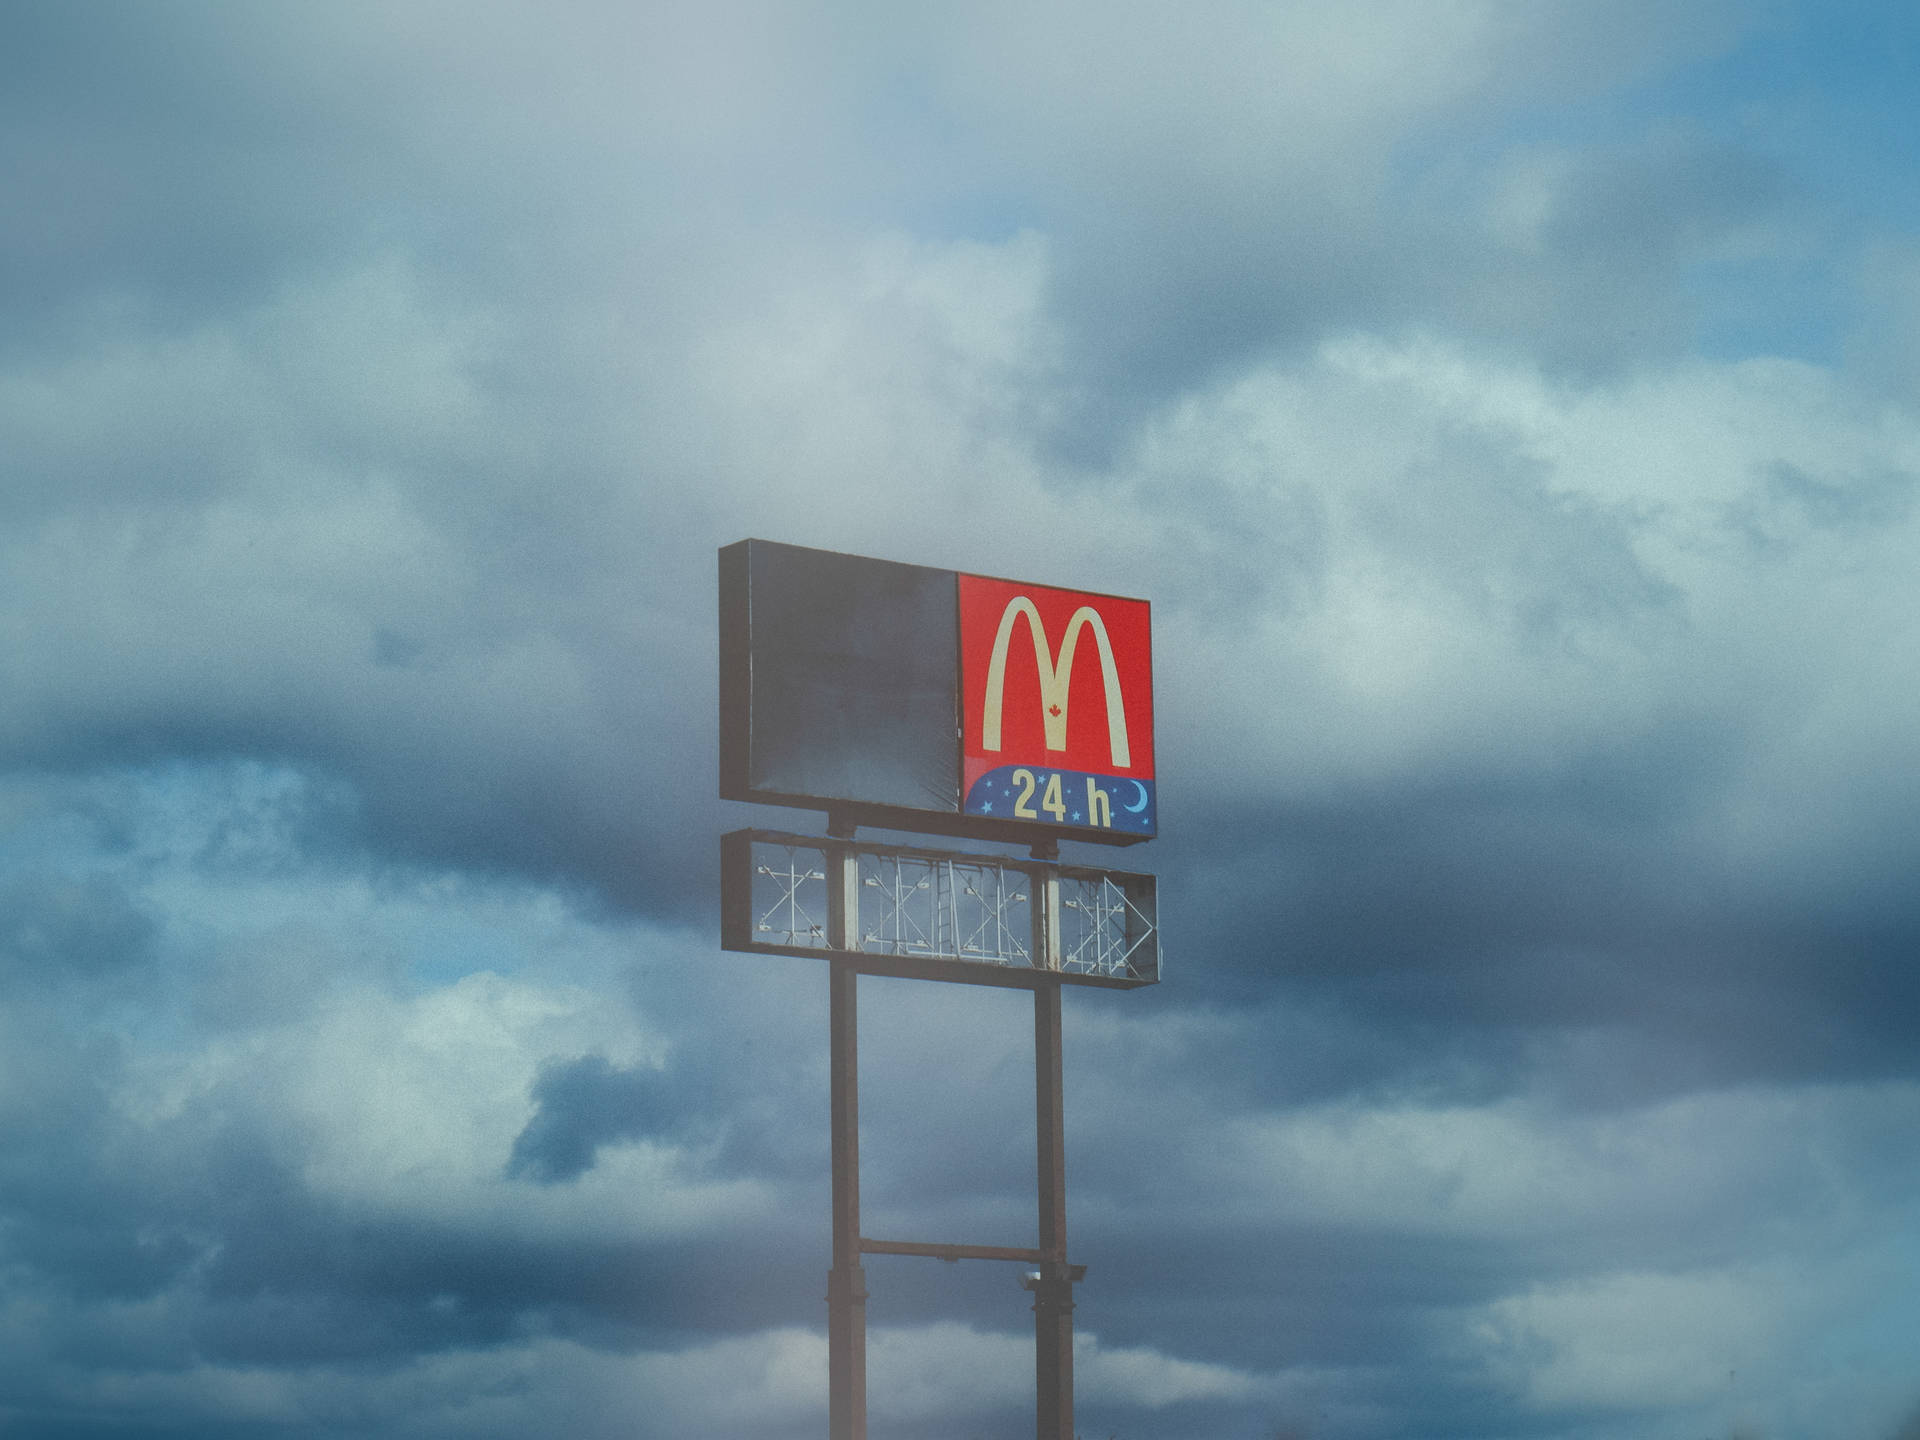 Stunning Cloud Aesthetic With Iconic Mcdonald's Signage Background